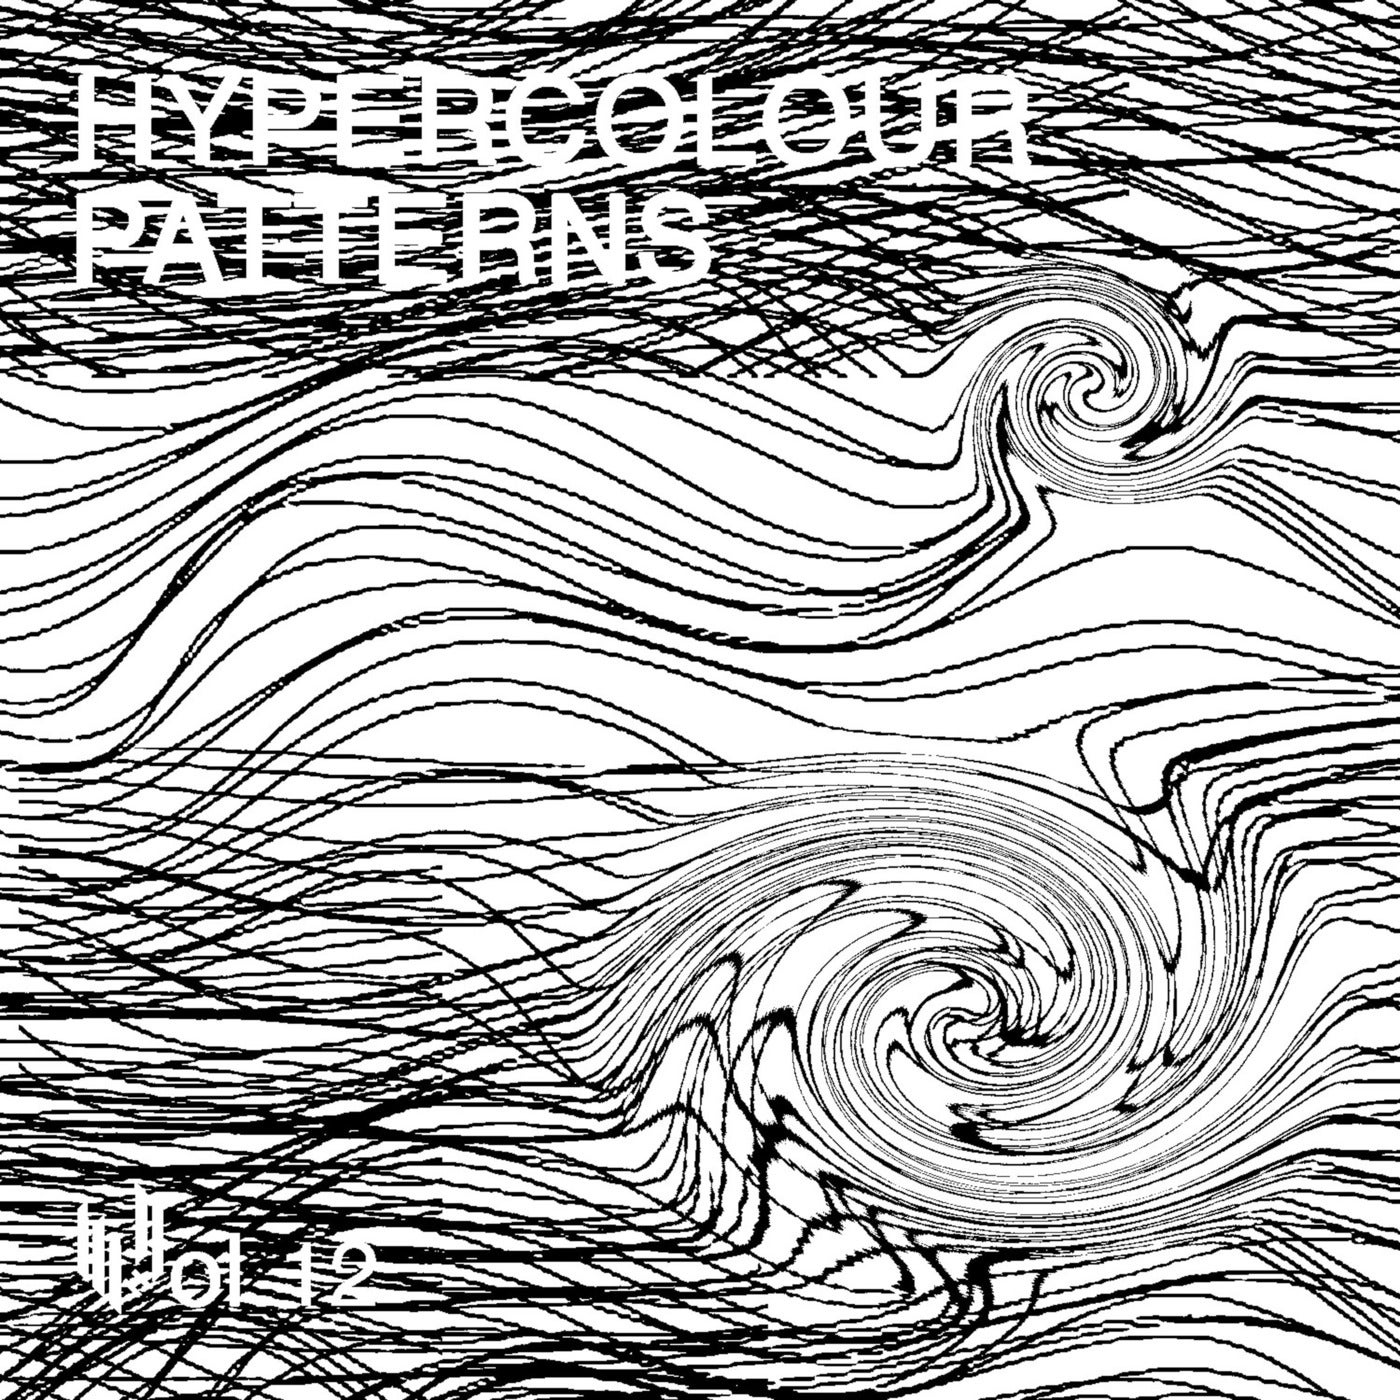 Hypercolour Patterns Volume 12